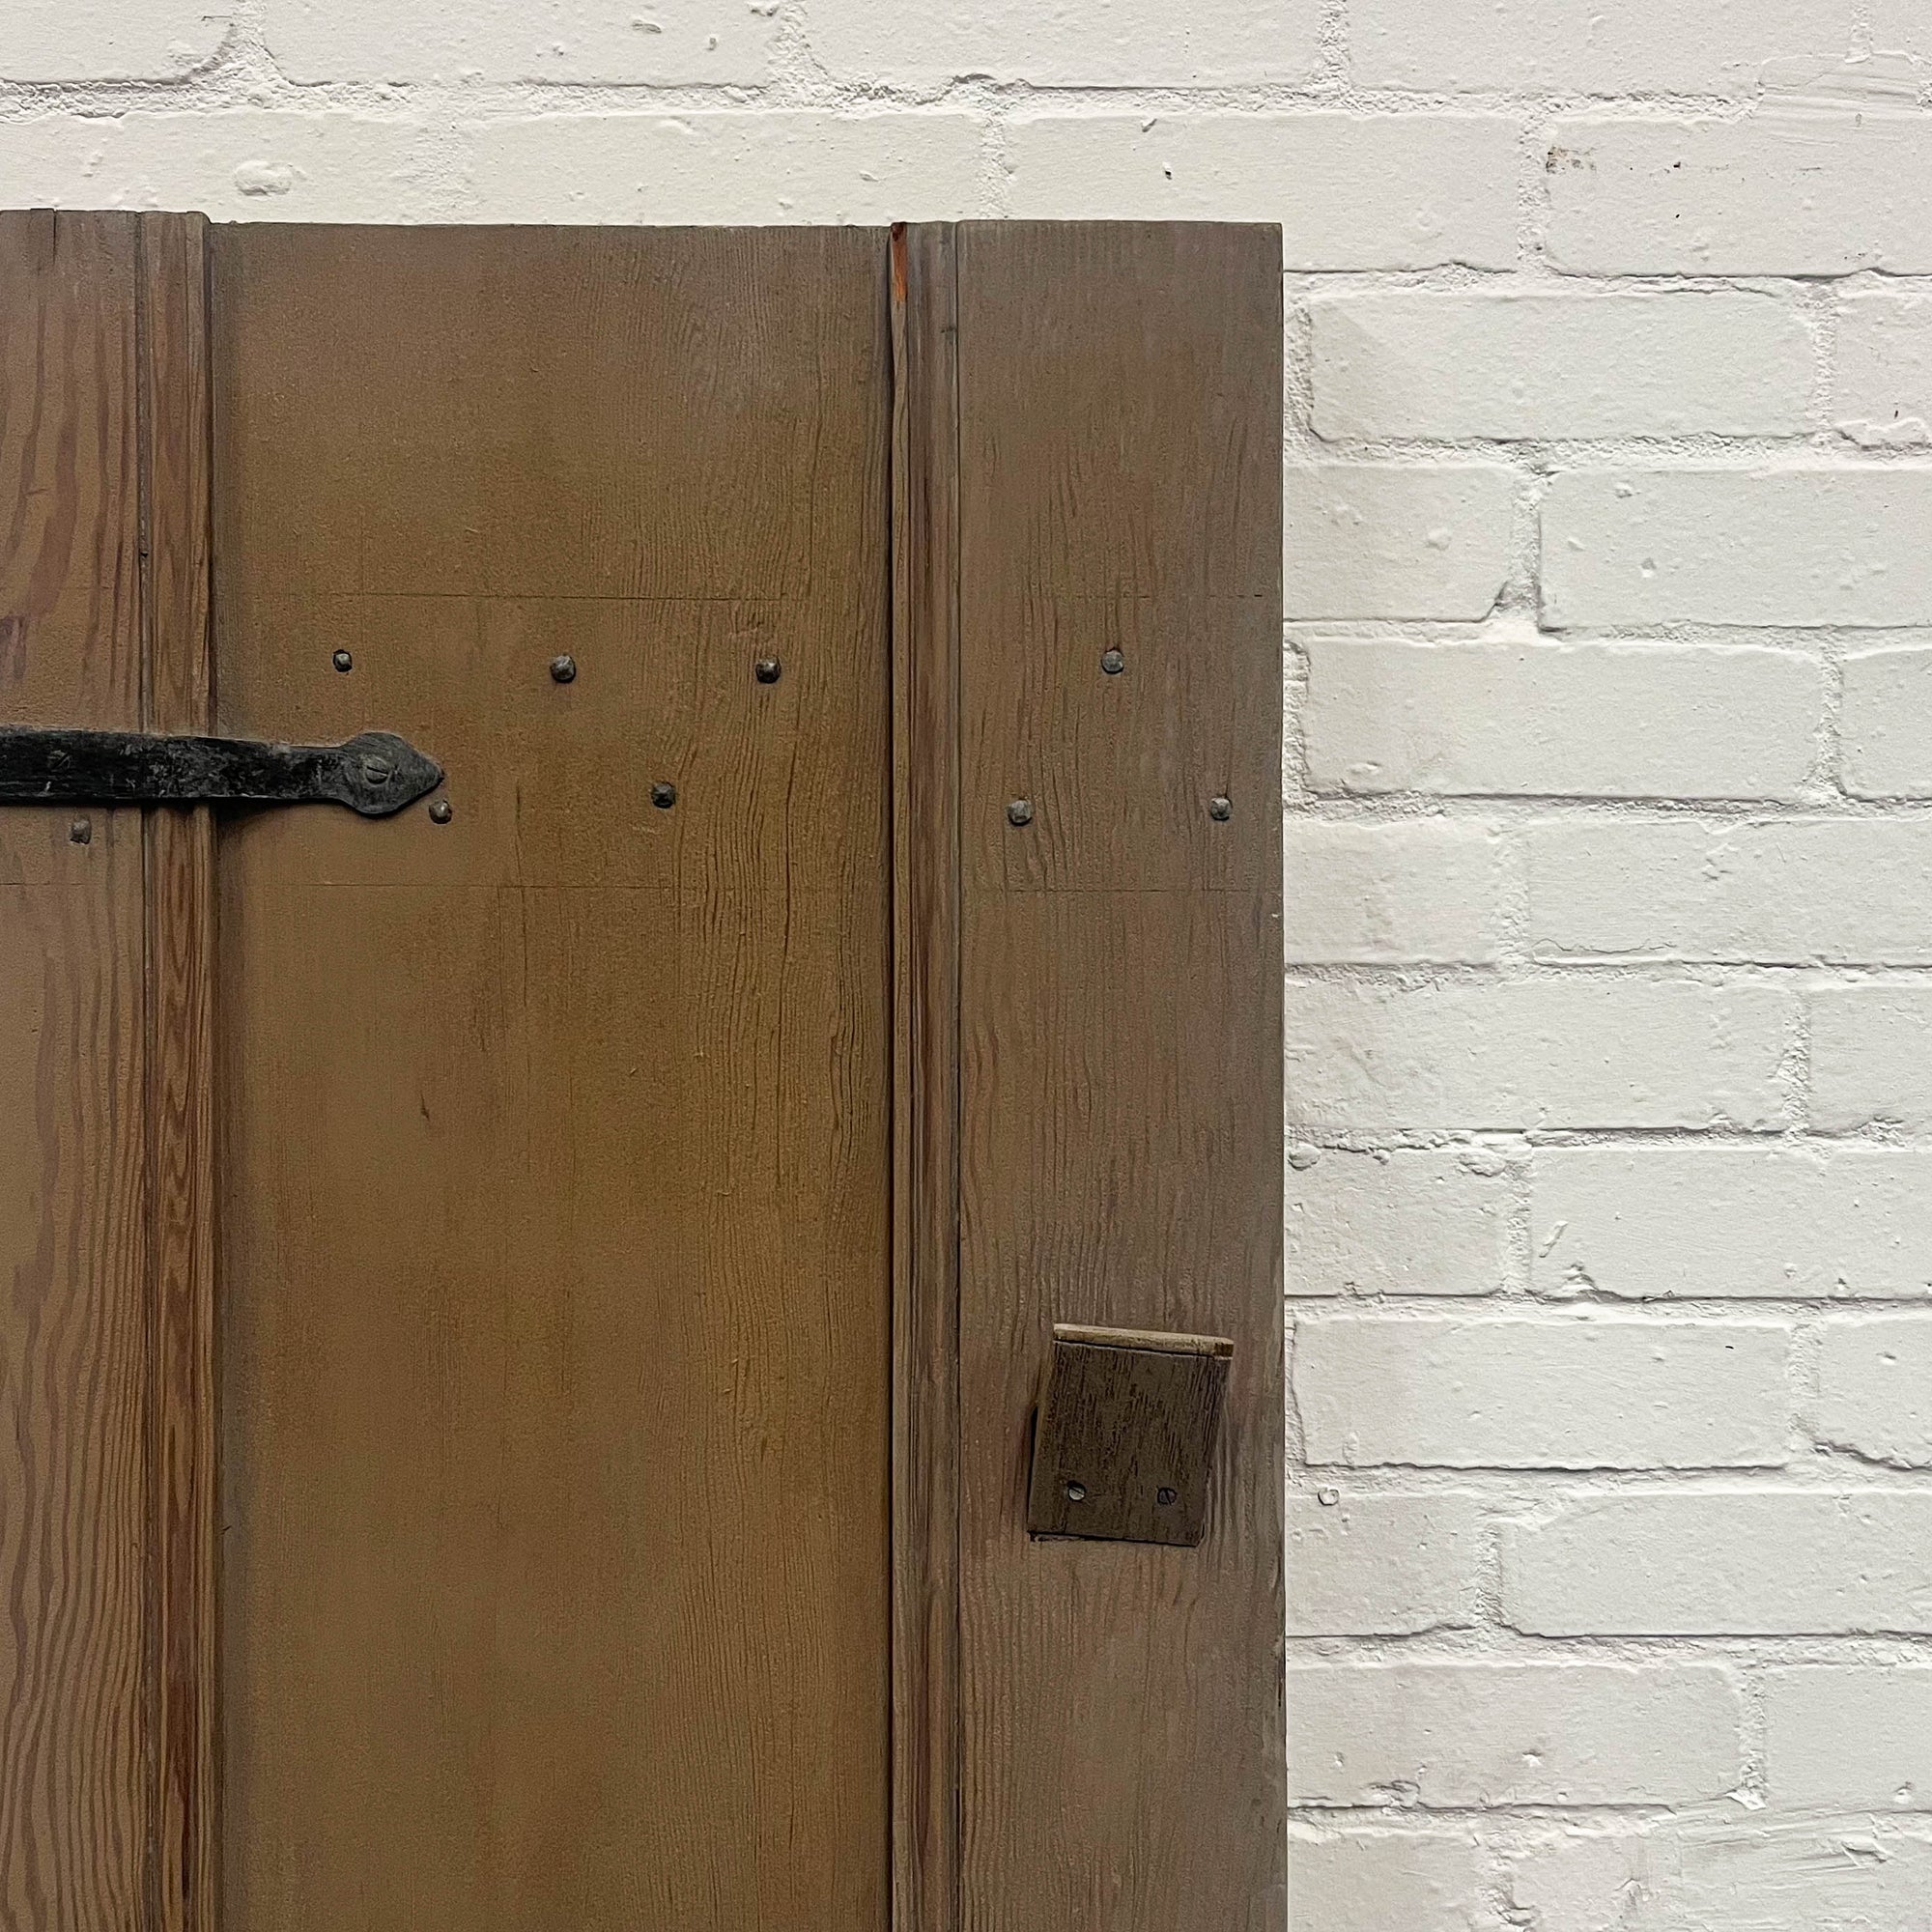 Antique Victorian Pine Latch Door - 174.5cm x 60.5cm | The Architectural Forum